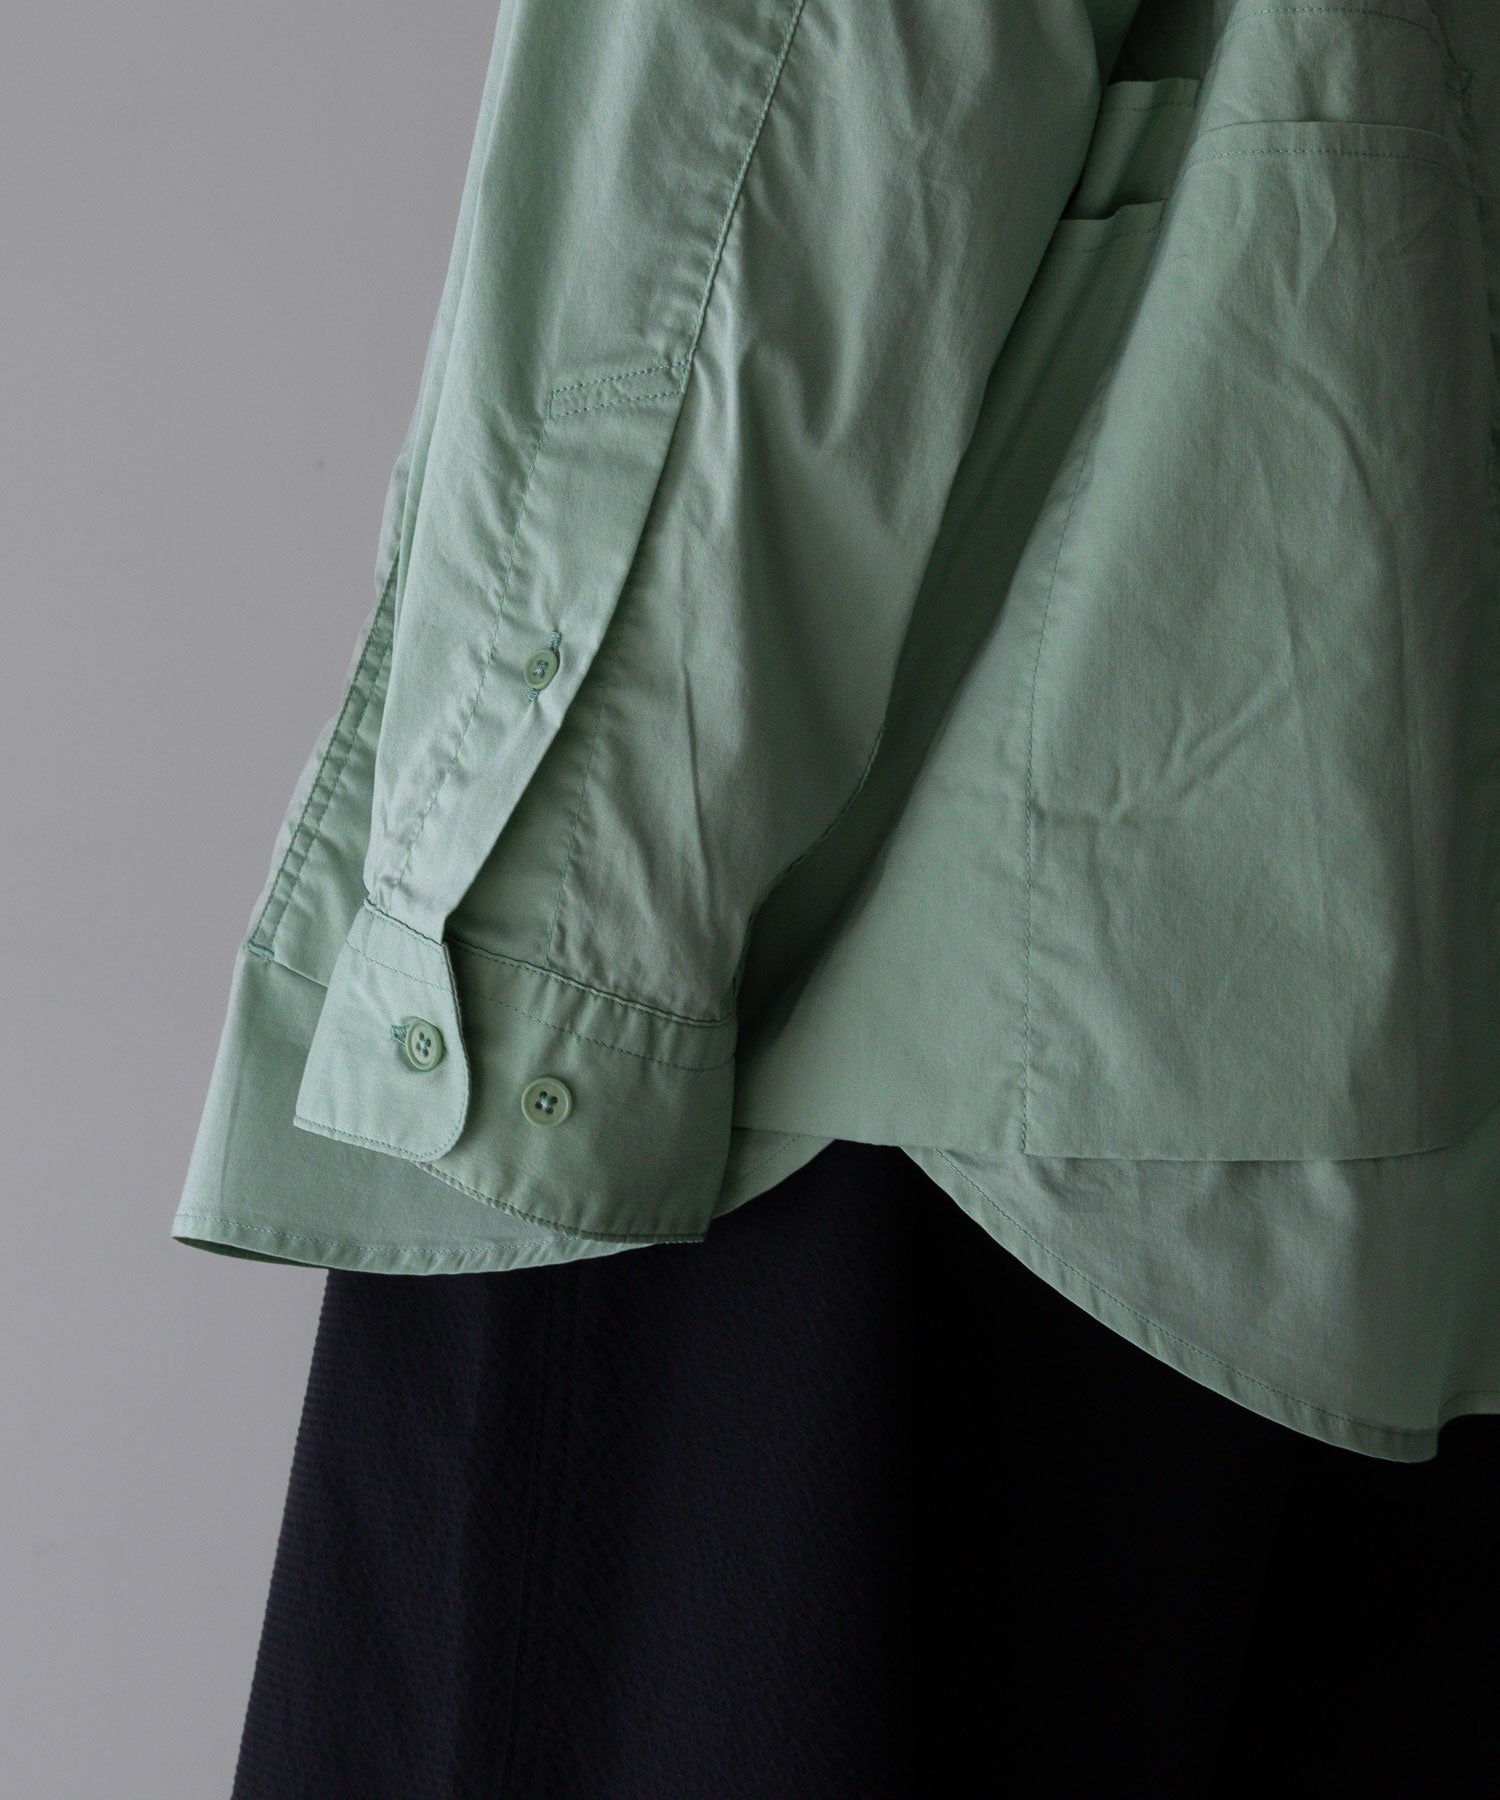 【NEITHERS】ネイダースのSleepwalker Apron L/S Shirt - LIGHT GREEN公式通販サイトsession福岡セレクトショップ